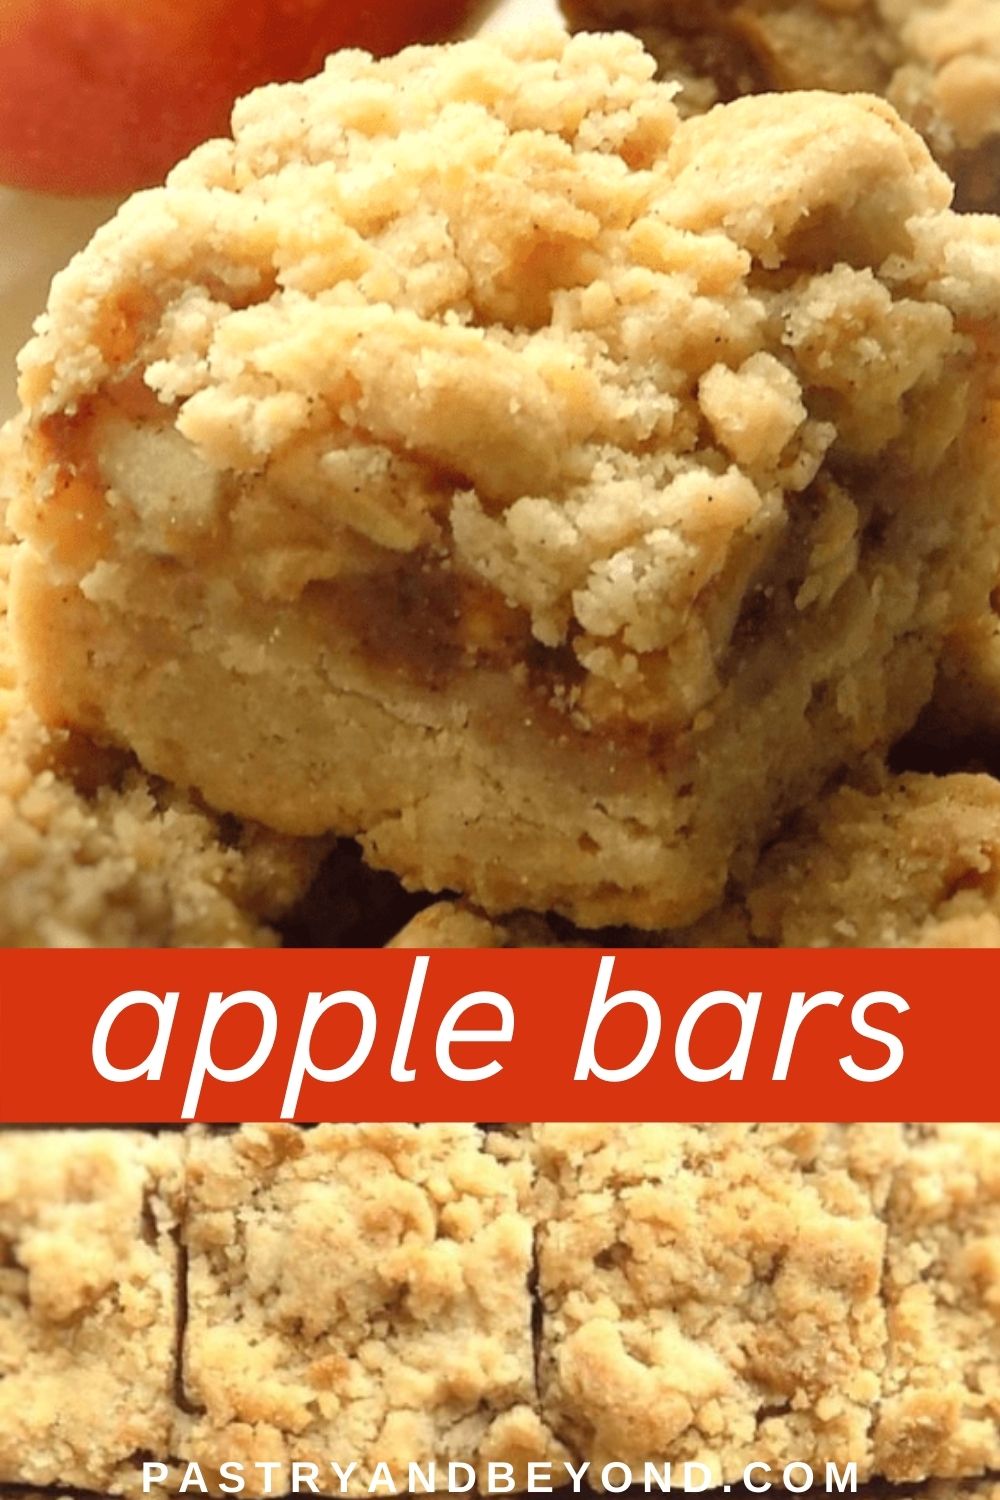 Apple Pie Bars Recipe - Pastry & Beyond